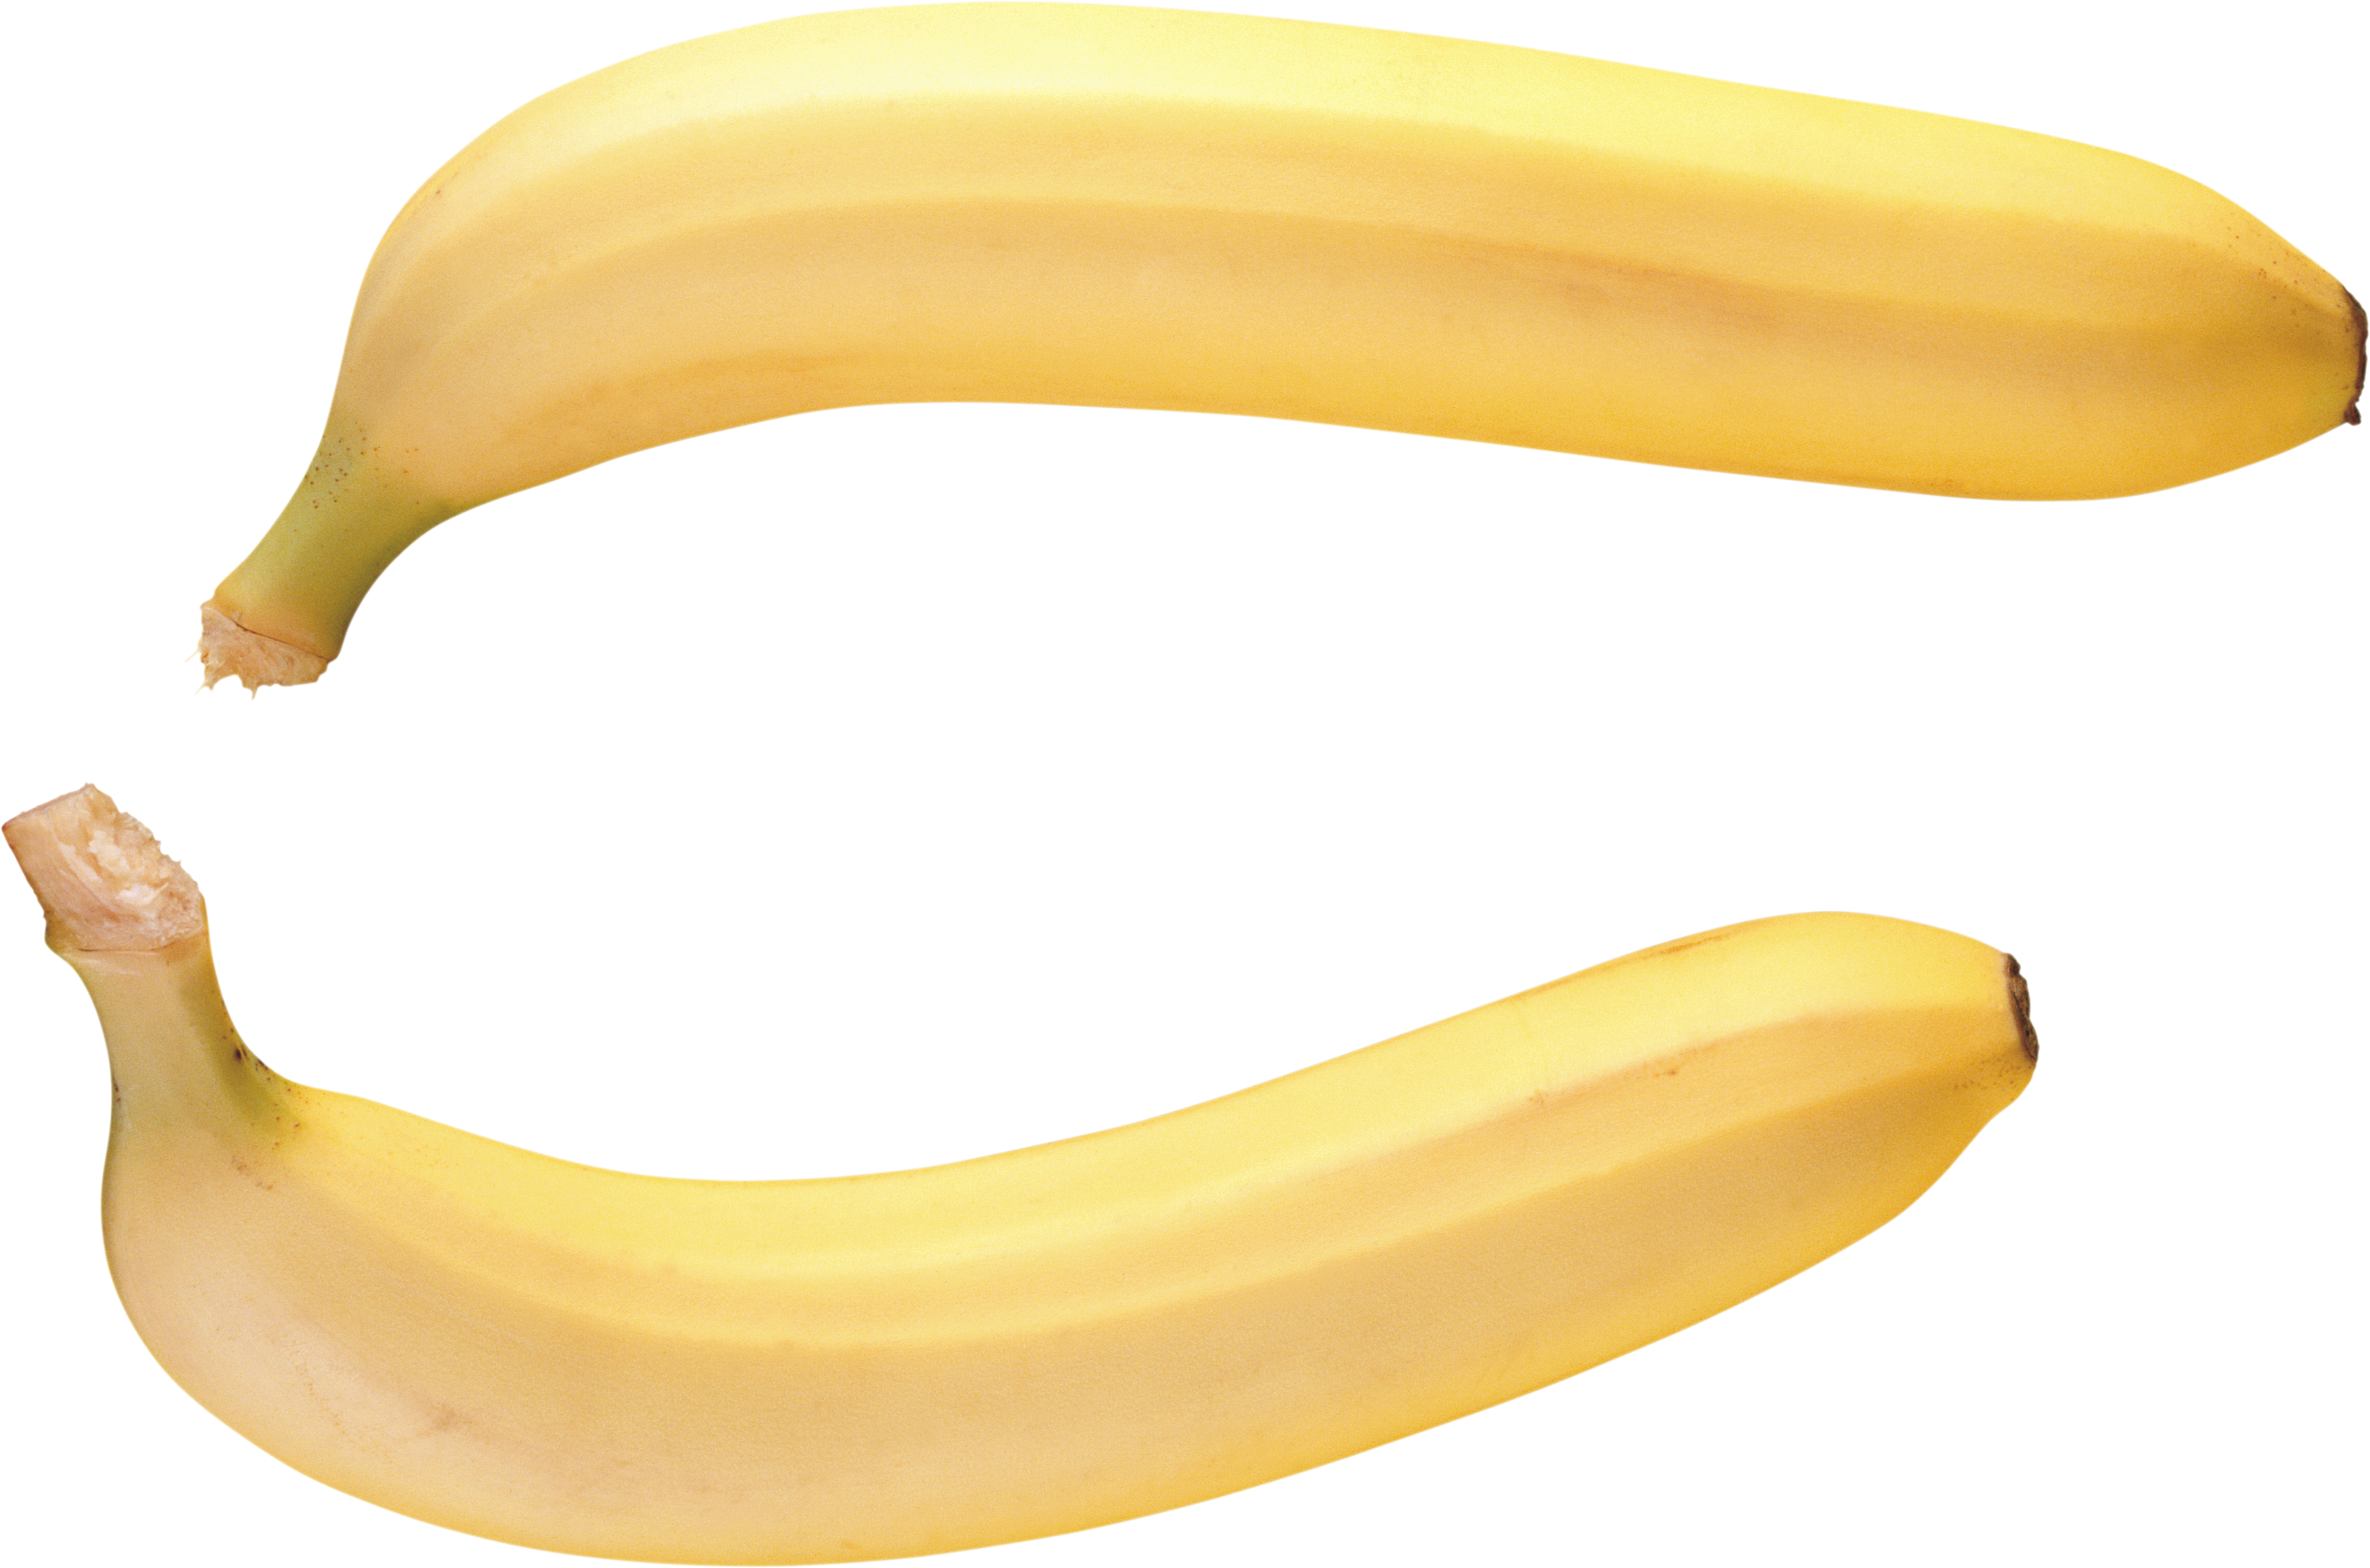 Deux bananes